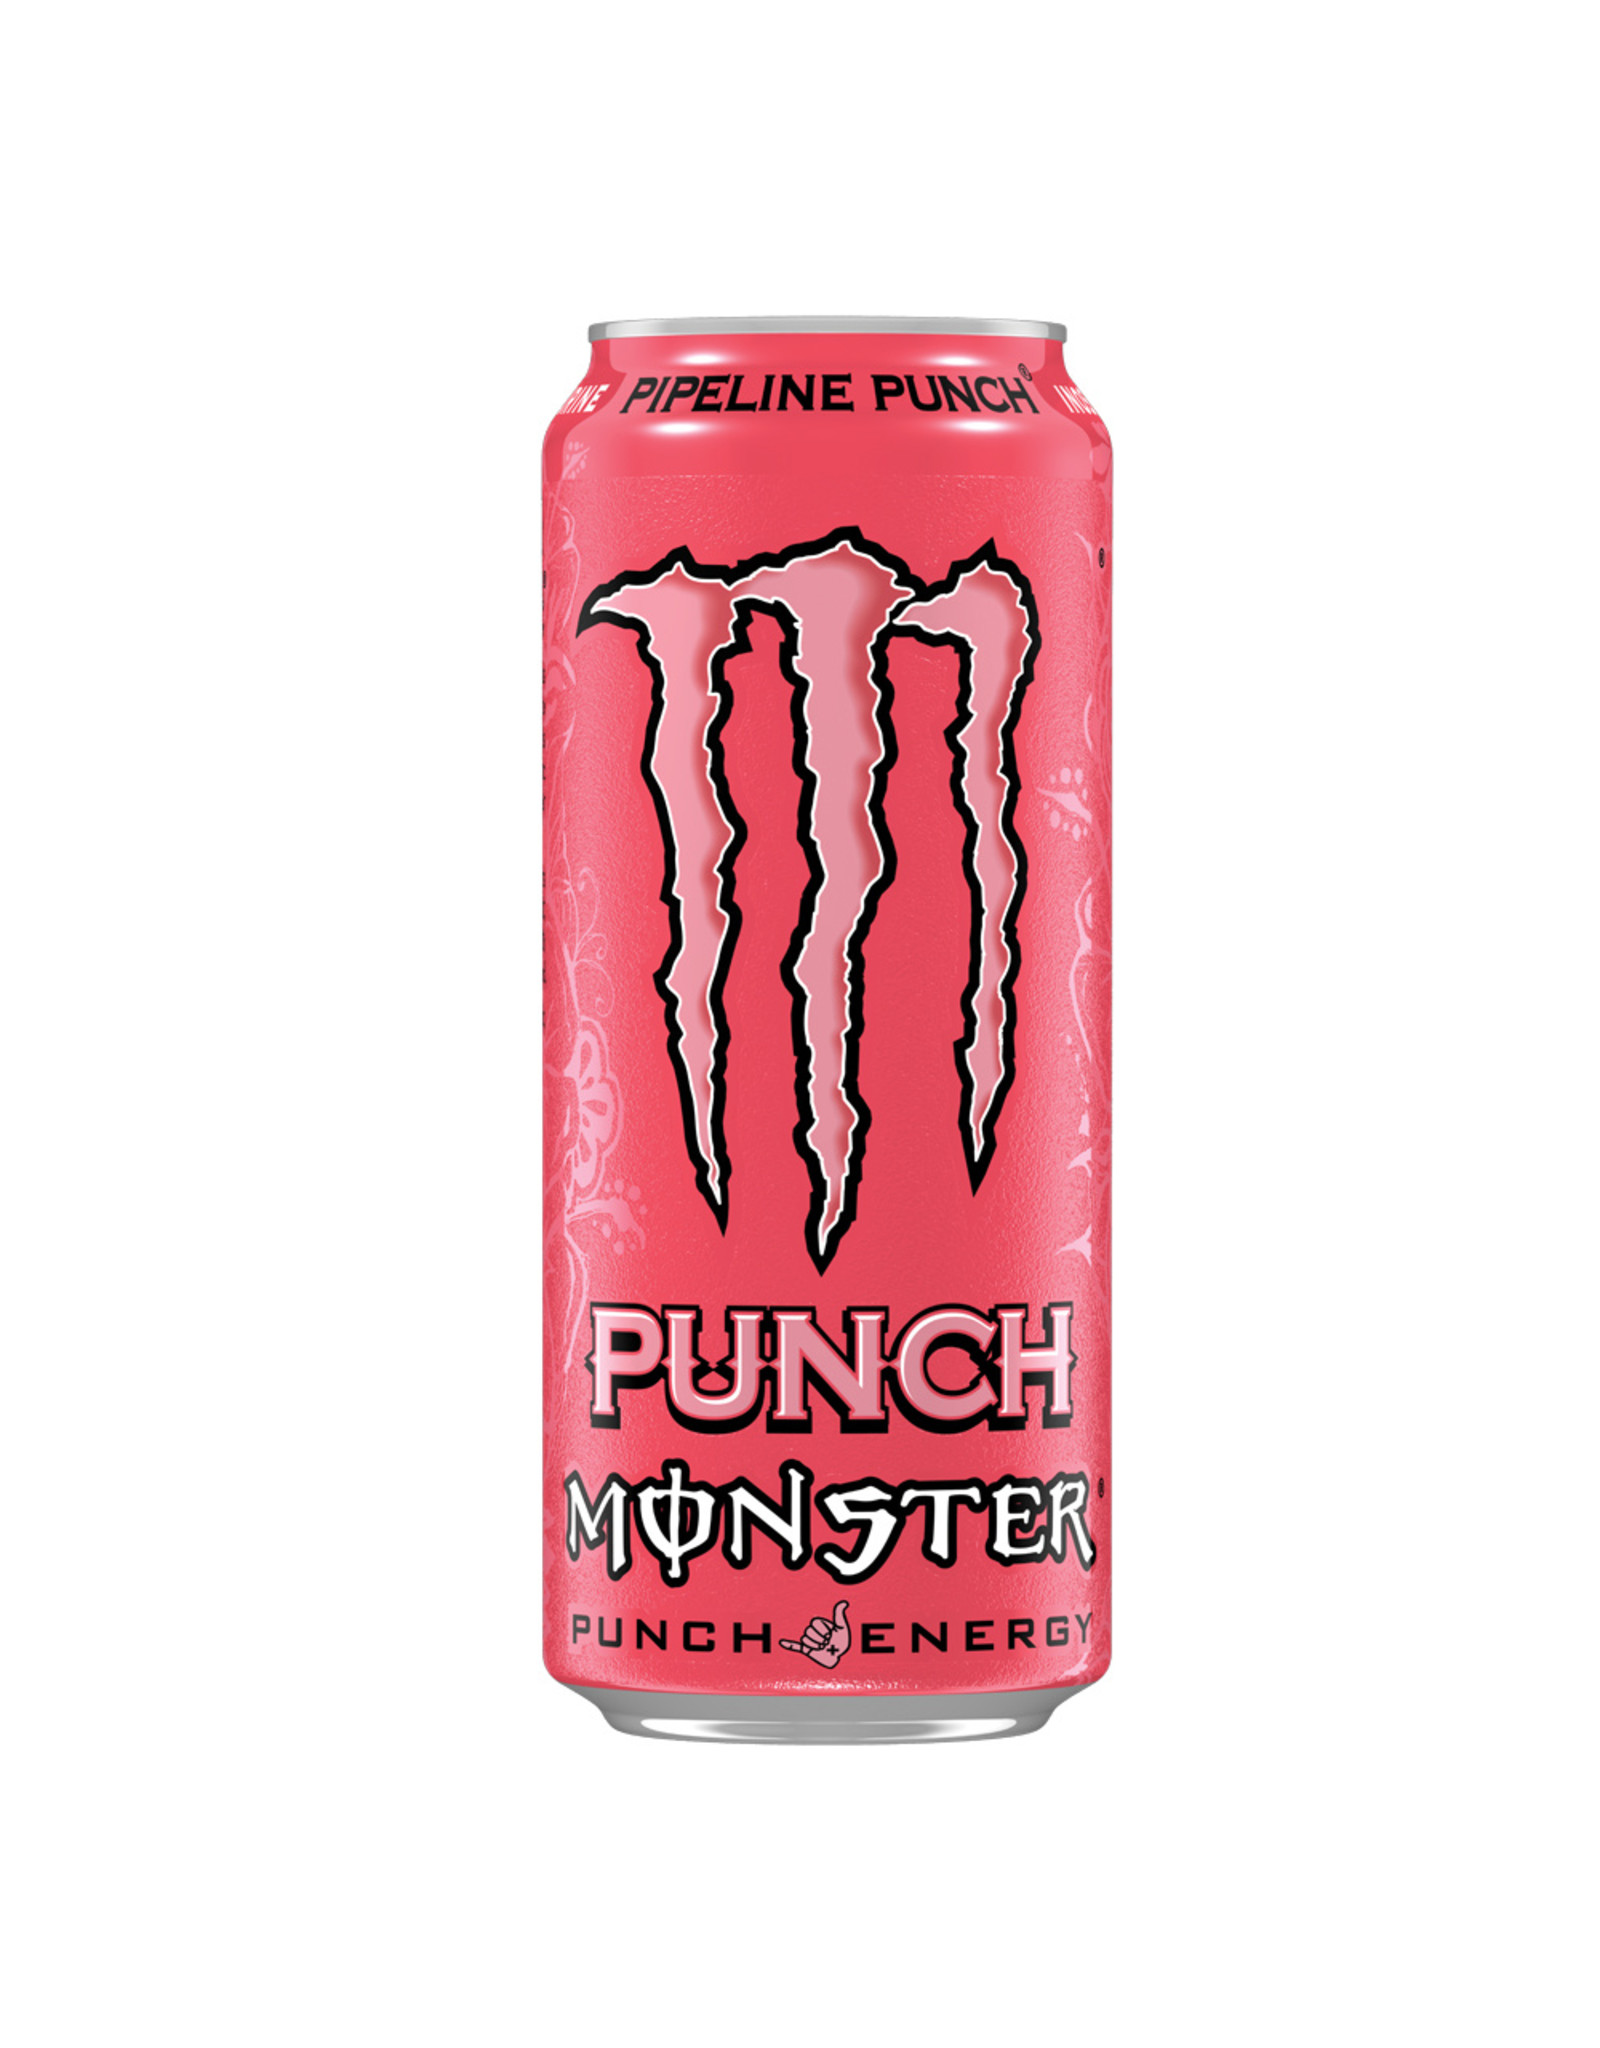 Monster Punch - Pipeline Punch (EU) - 500ml